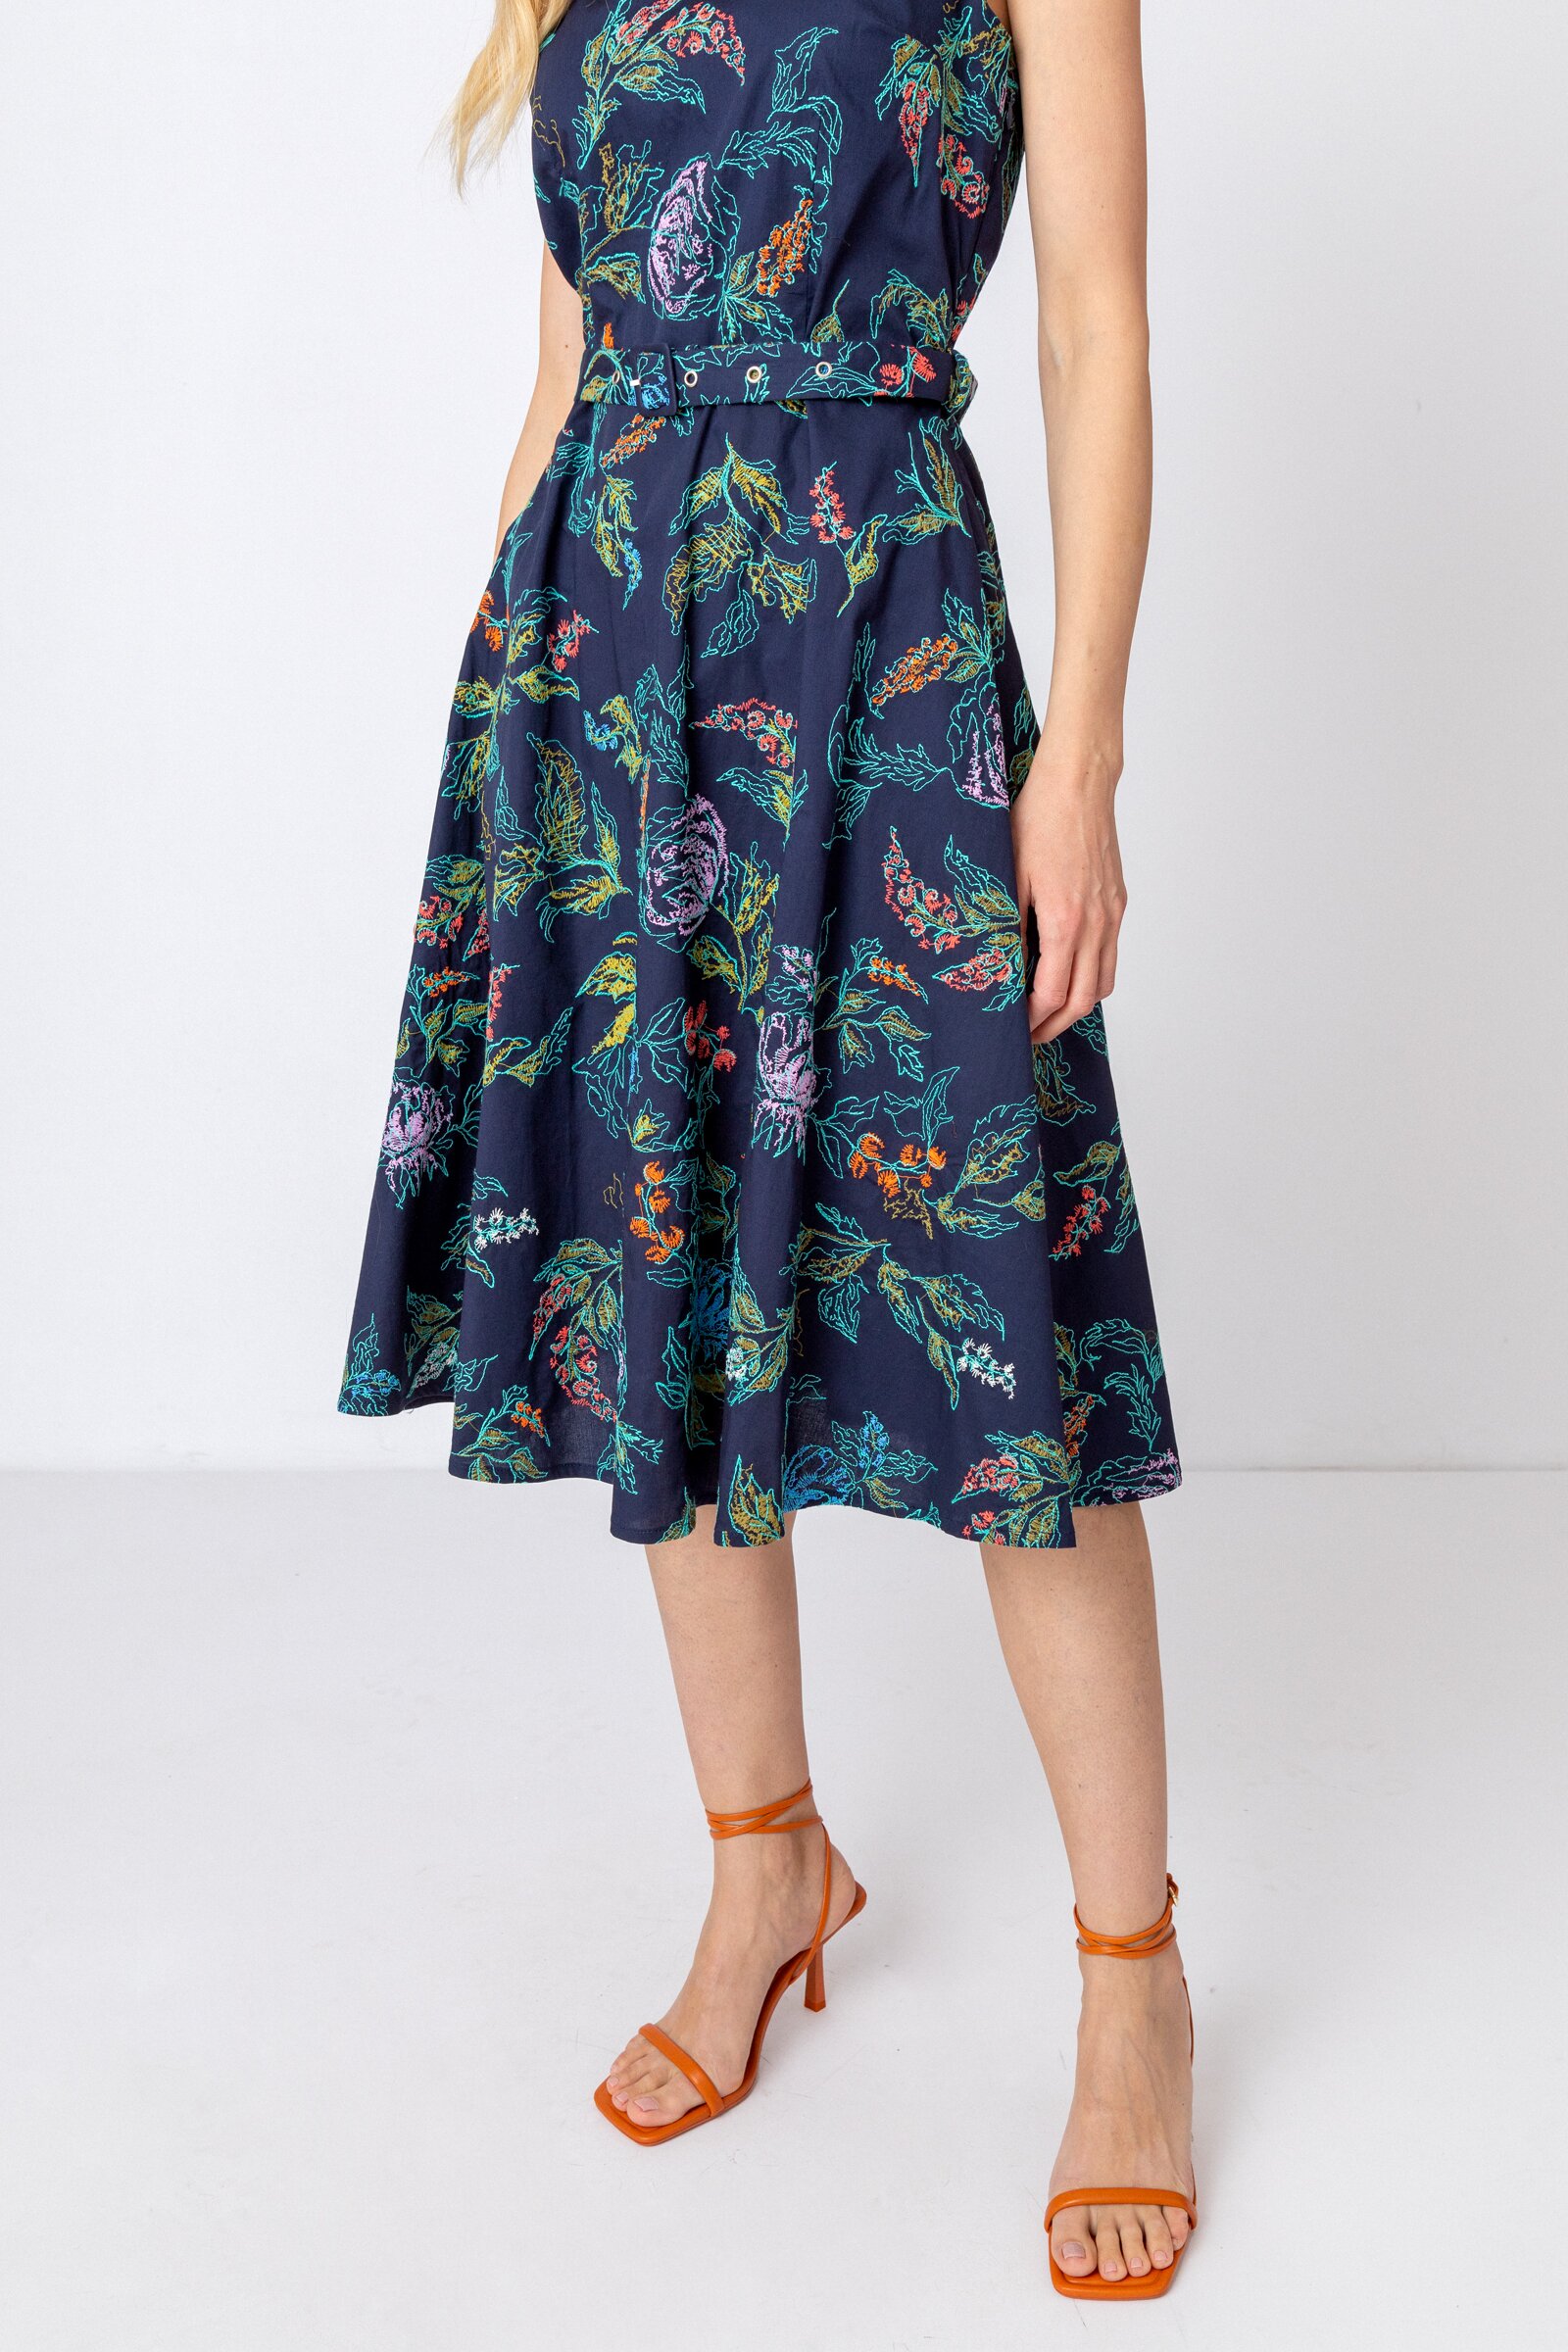 Embroidered Dress, Floral Motif - Dresses | Ivko Woman